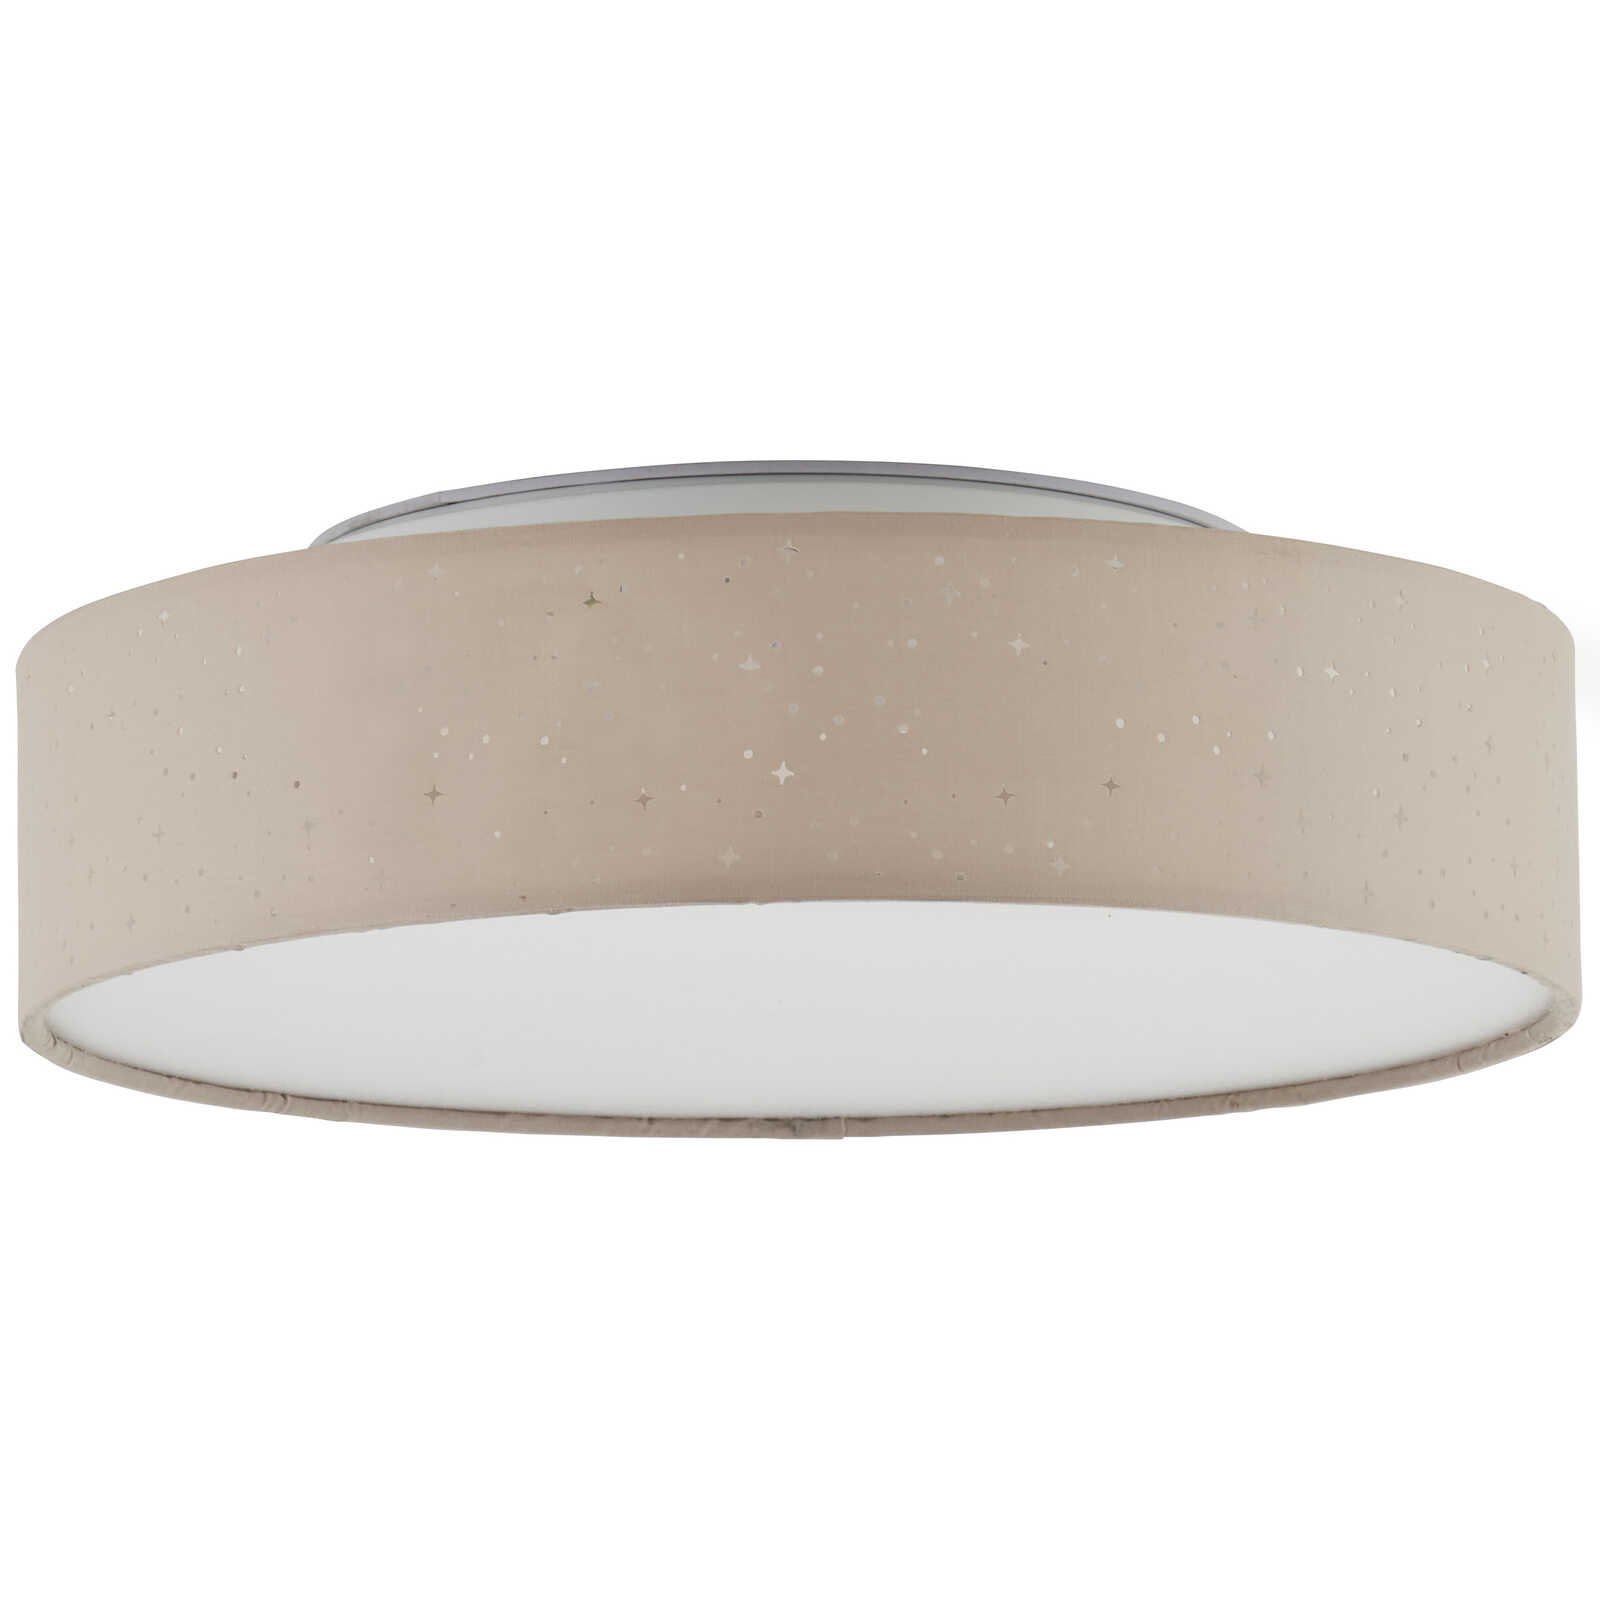             Textile ceiling light - Ava 3 - Grey
        